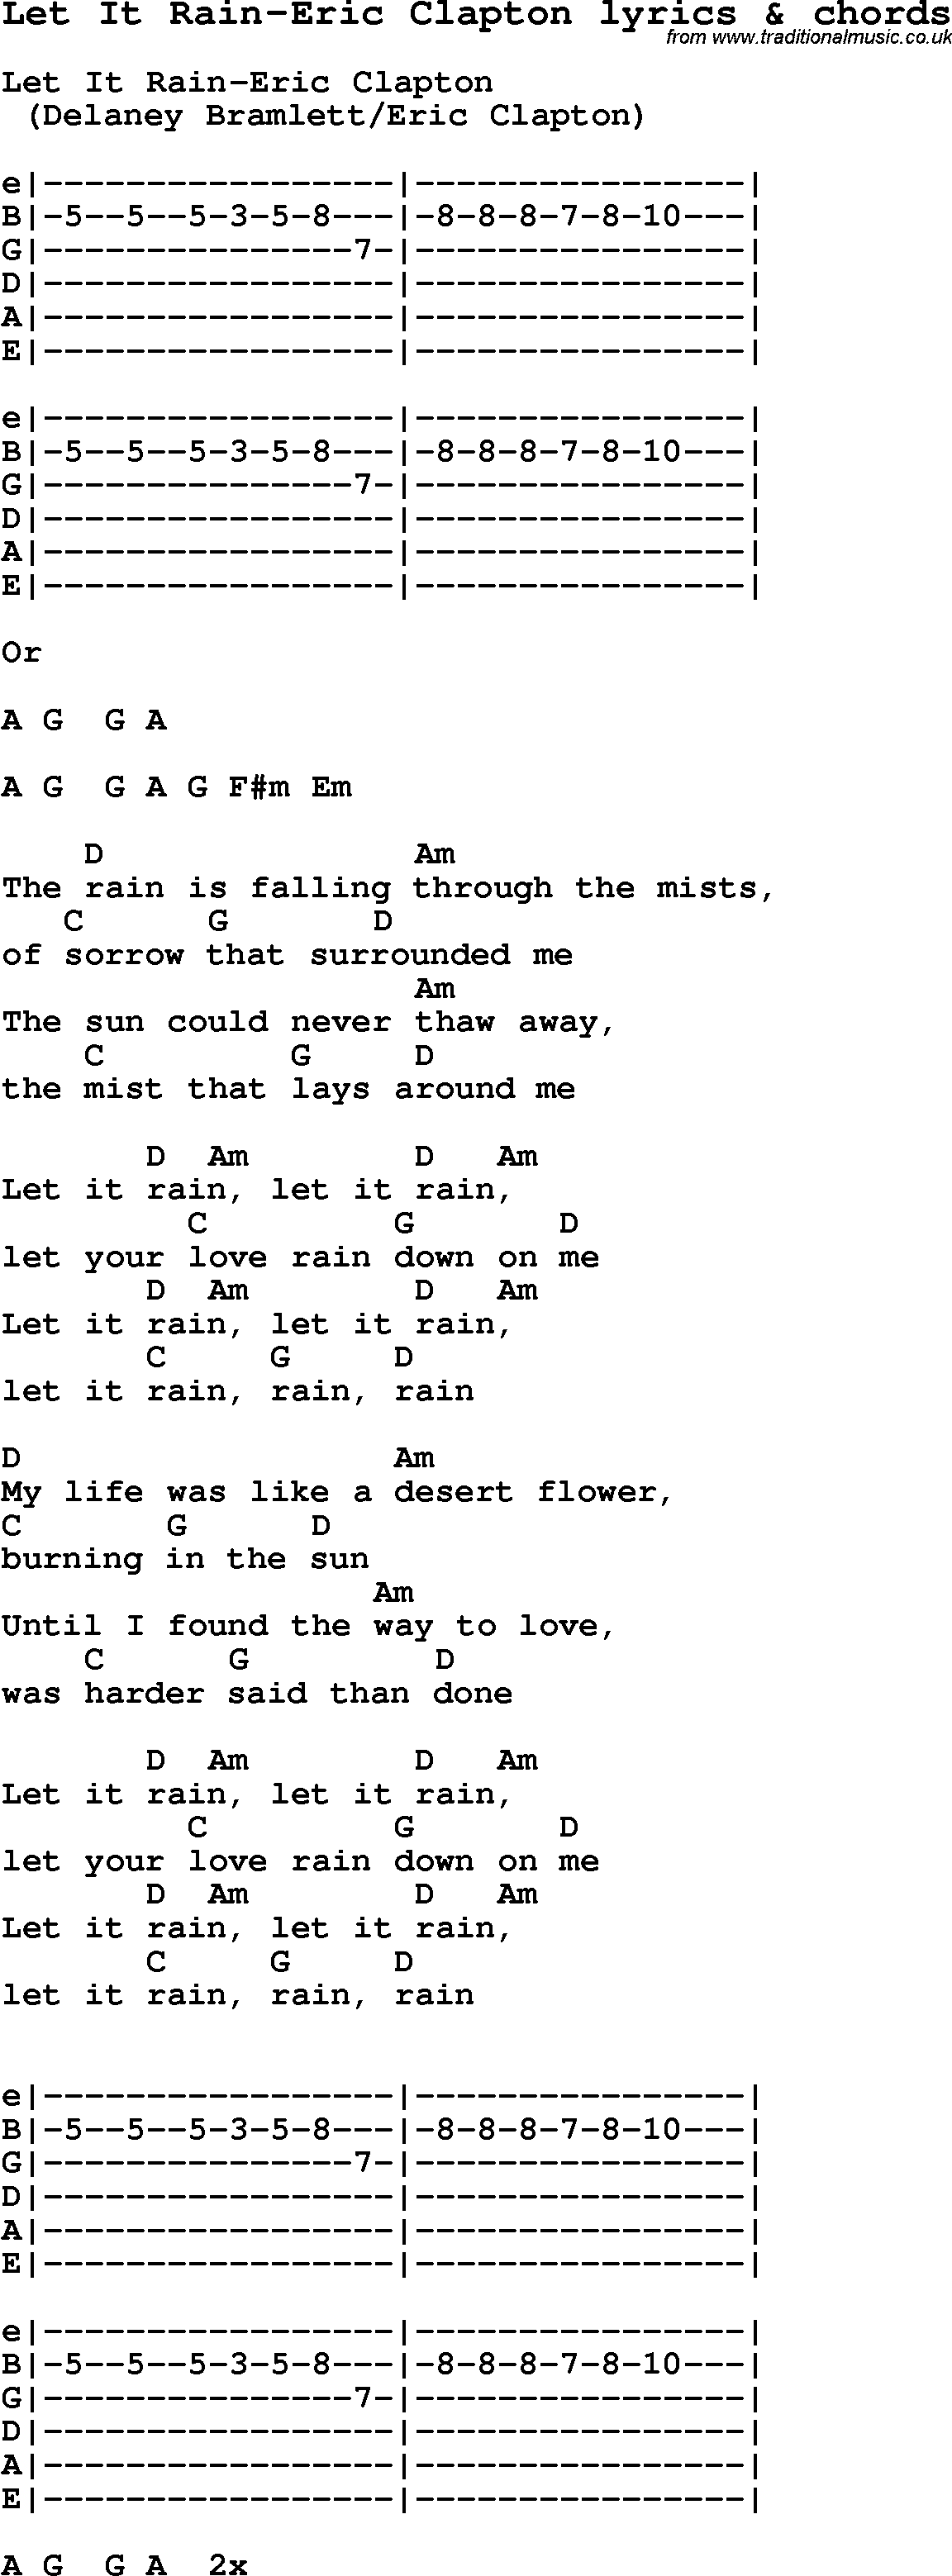 Love Song Lyrics for: Let It Rain-Eric Clapton with chords for Ukulele, Guitar Banjo etc.